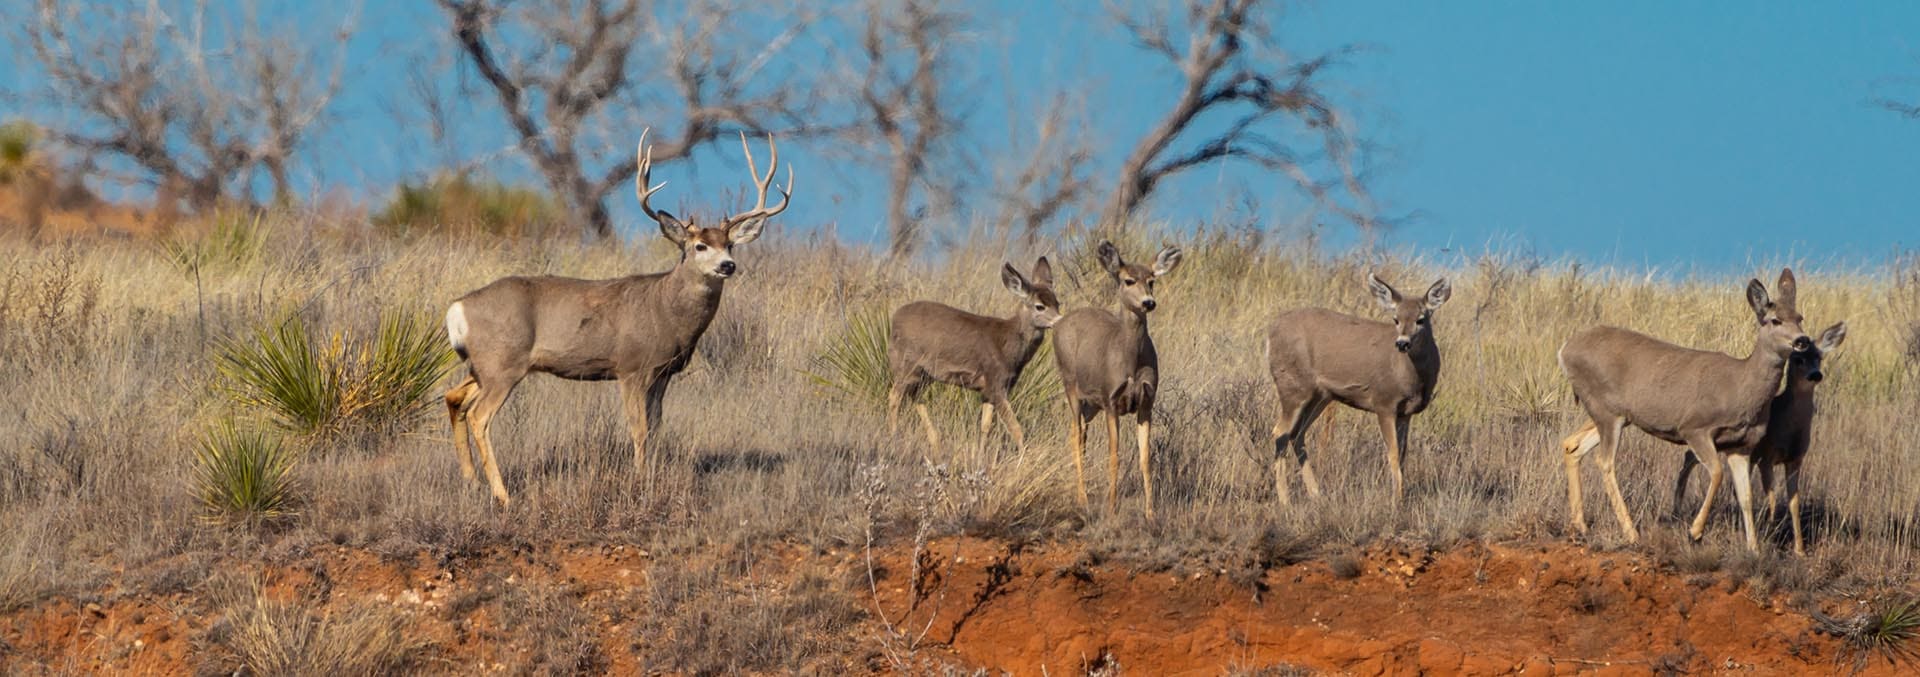 texas upland bird hunting land for sale mv2 ranch